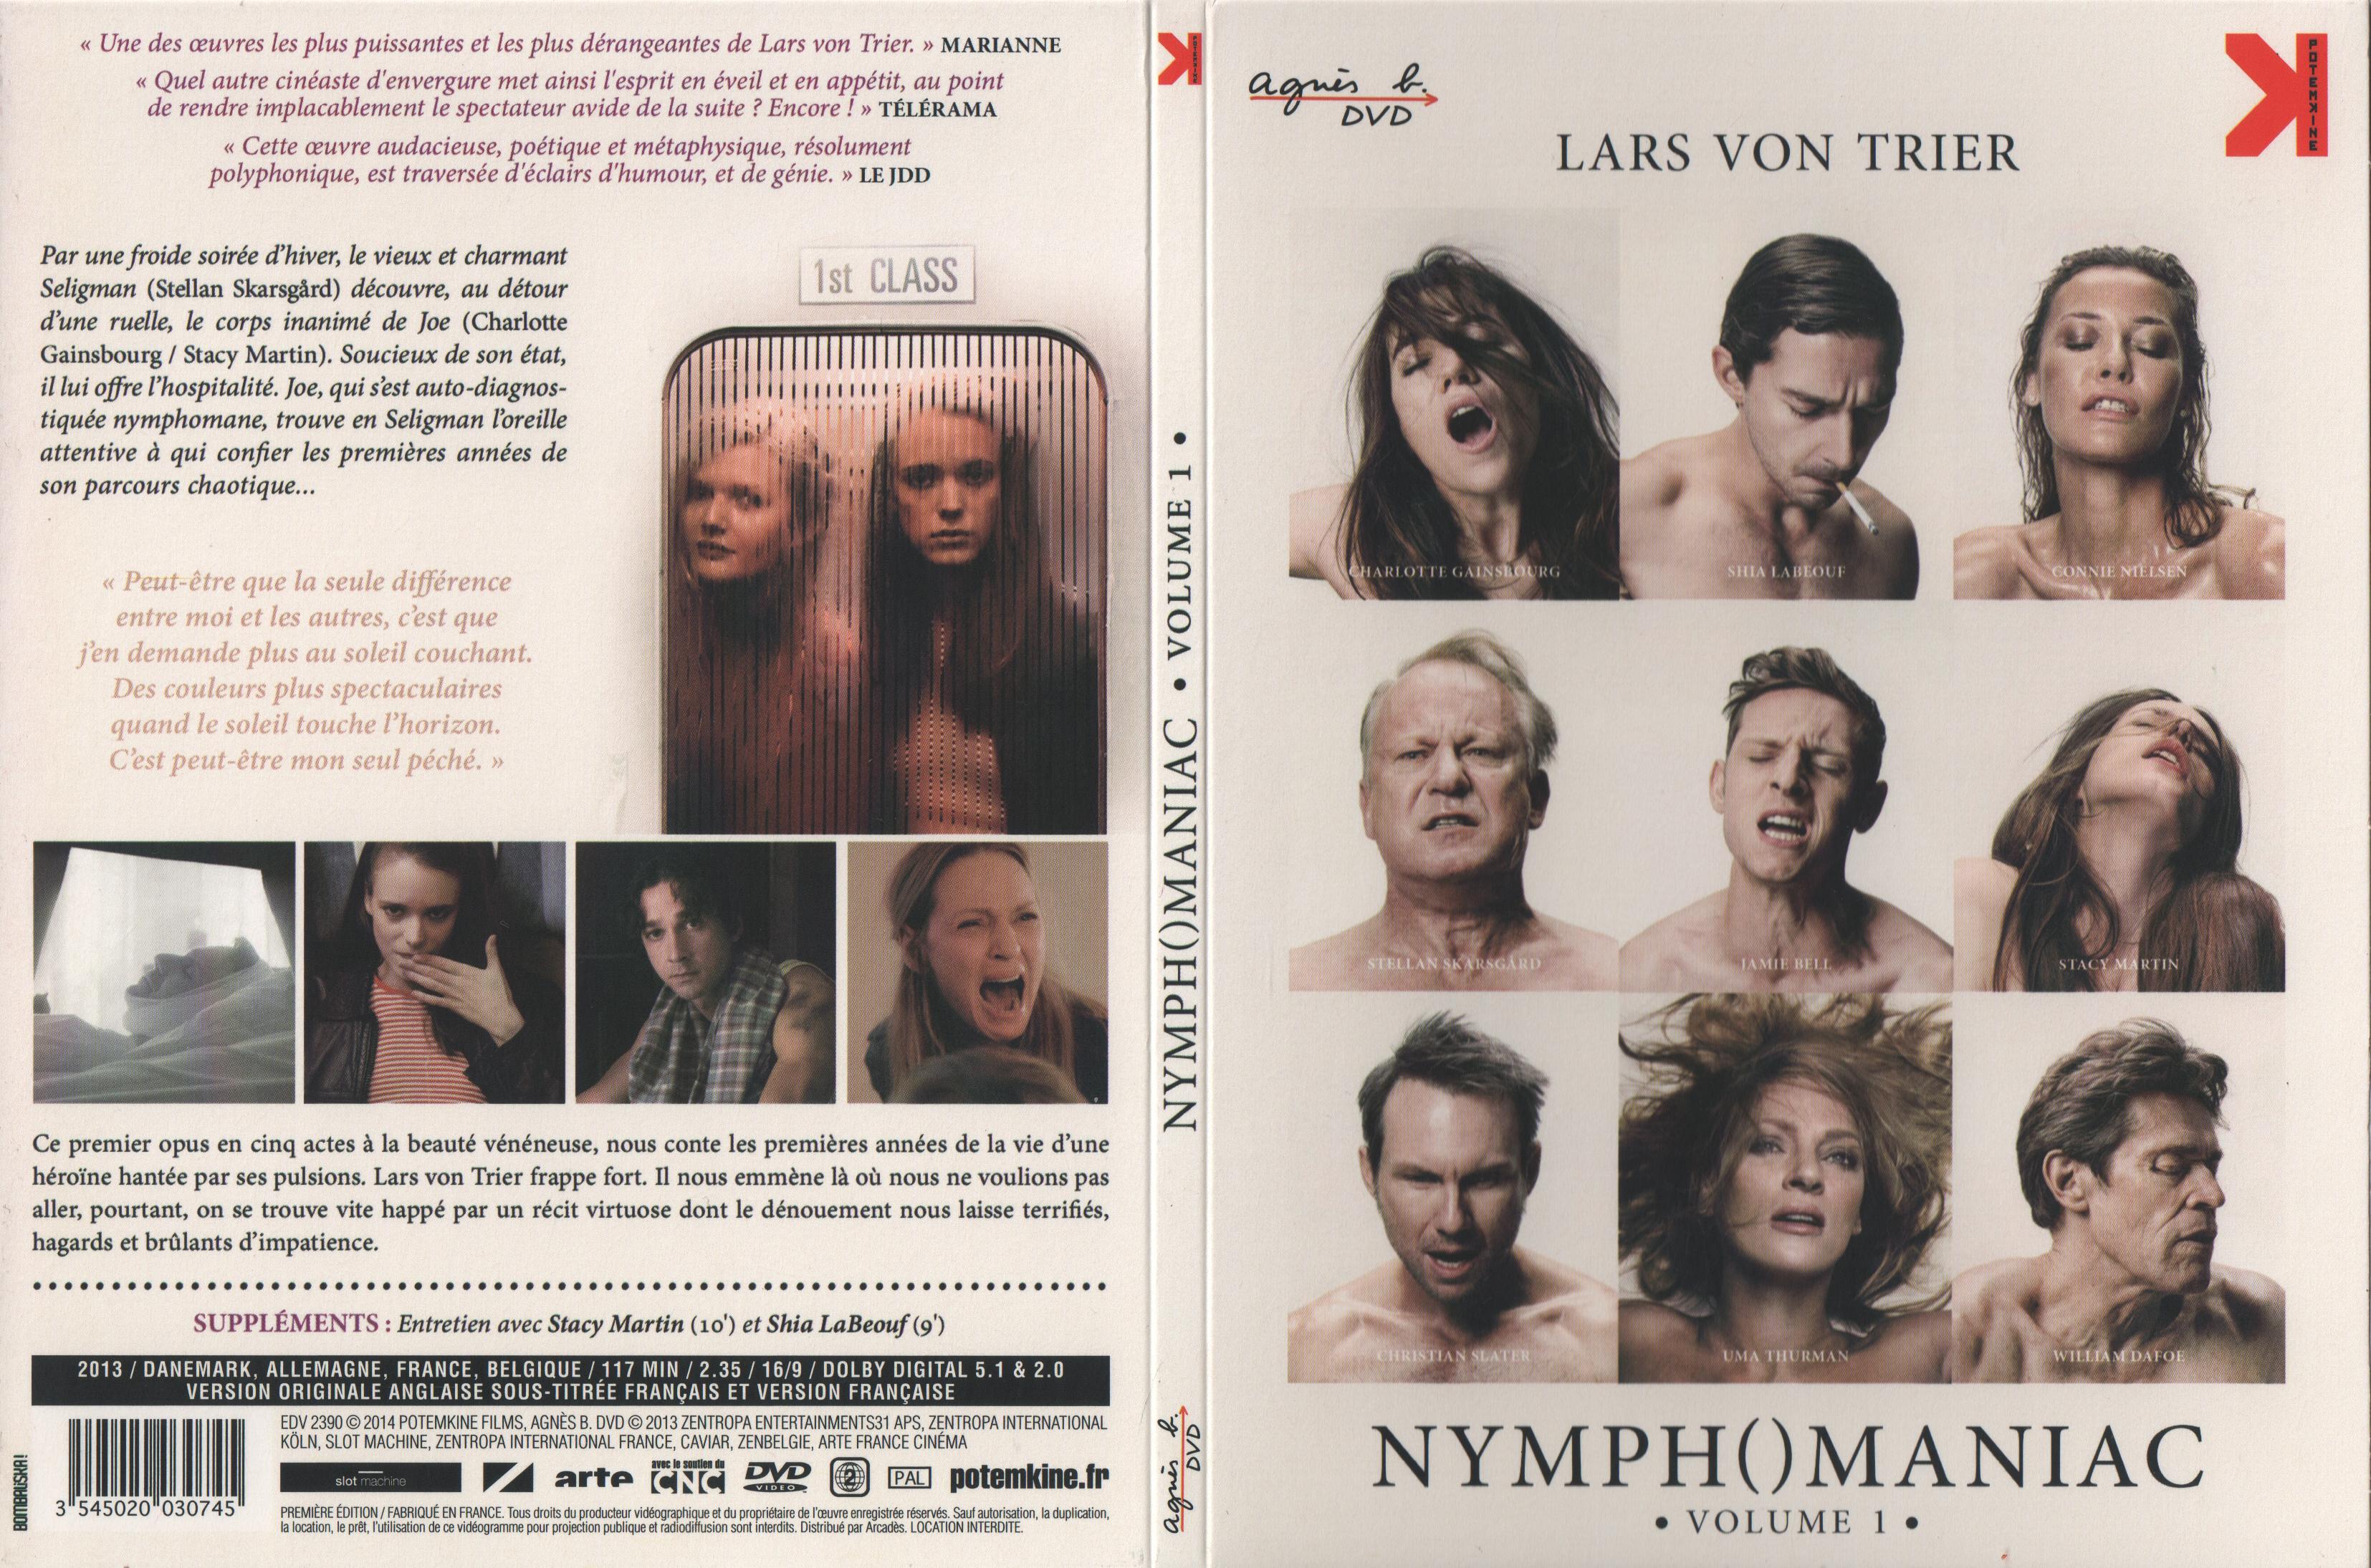 Jaquette DVD Nymphomaniac vol 1